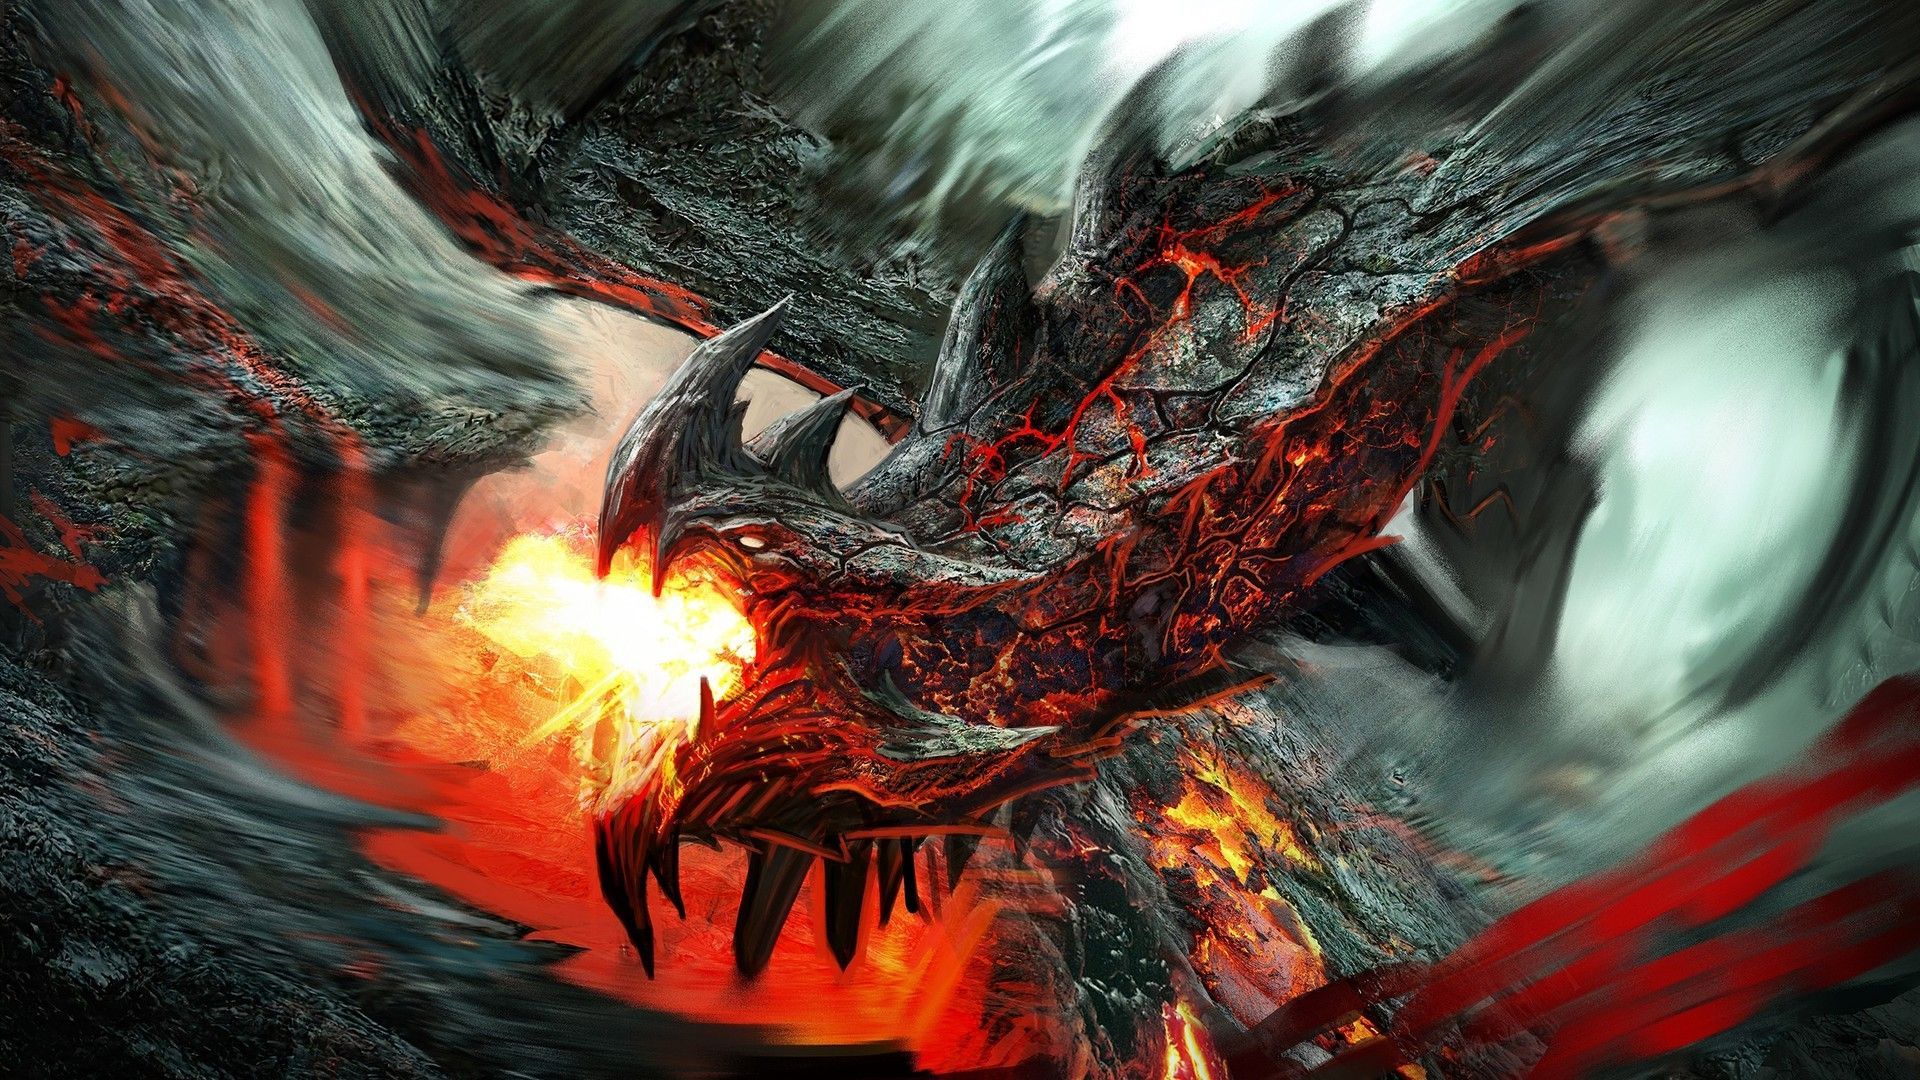 Fire Lava Dragon Wallpaper Fantasy Desktop 166396